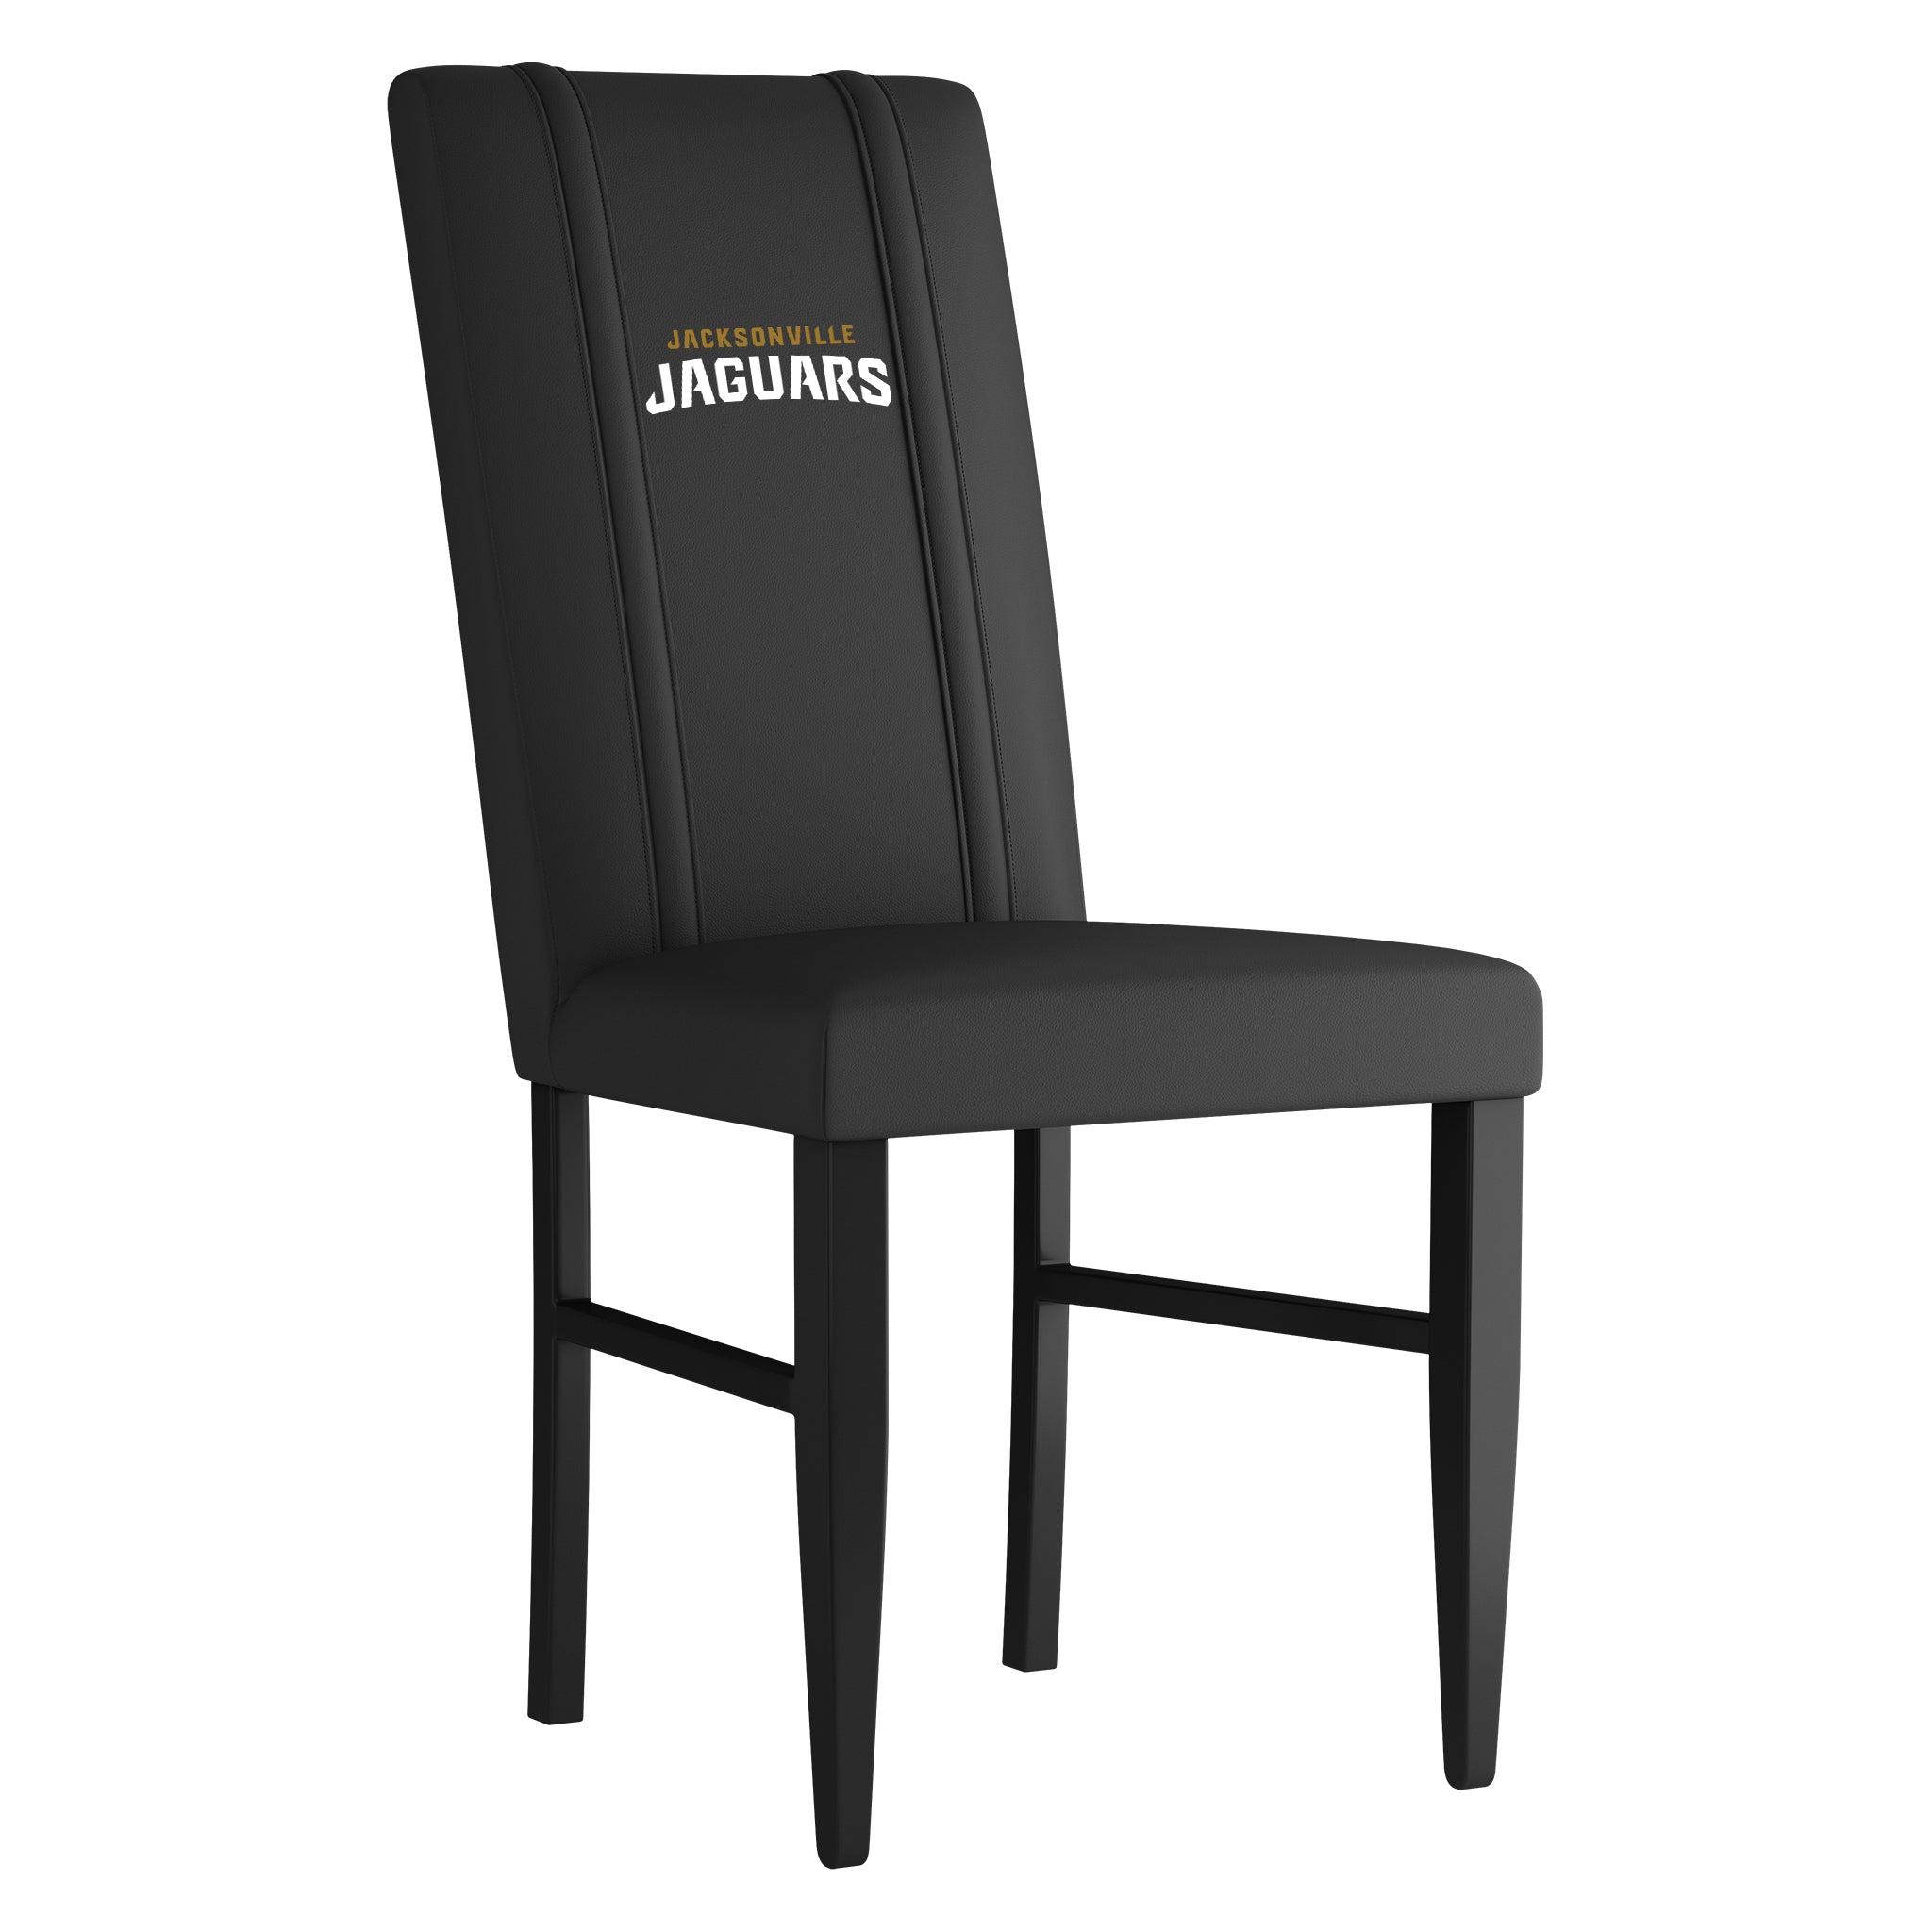 Jacksonville Jaguars Side Chair 2000